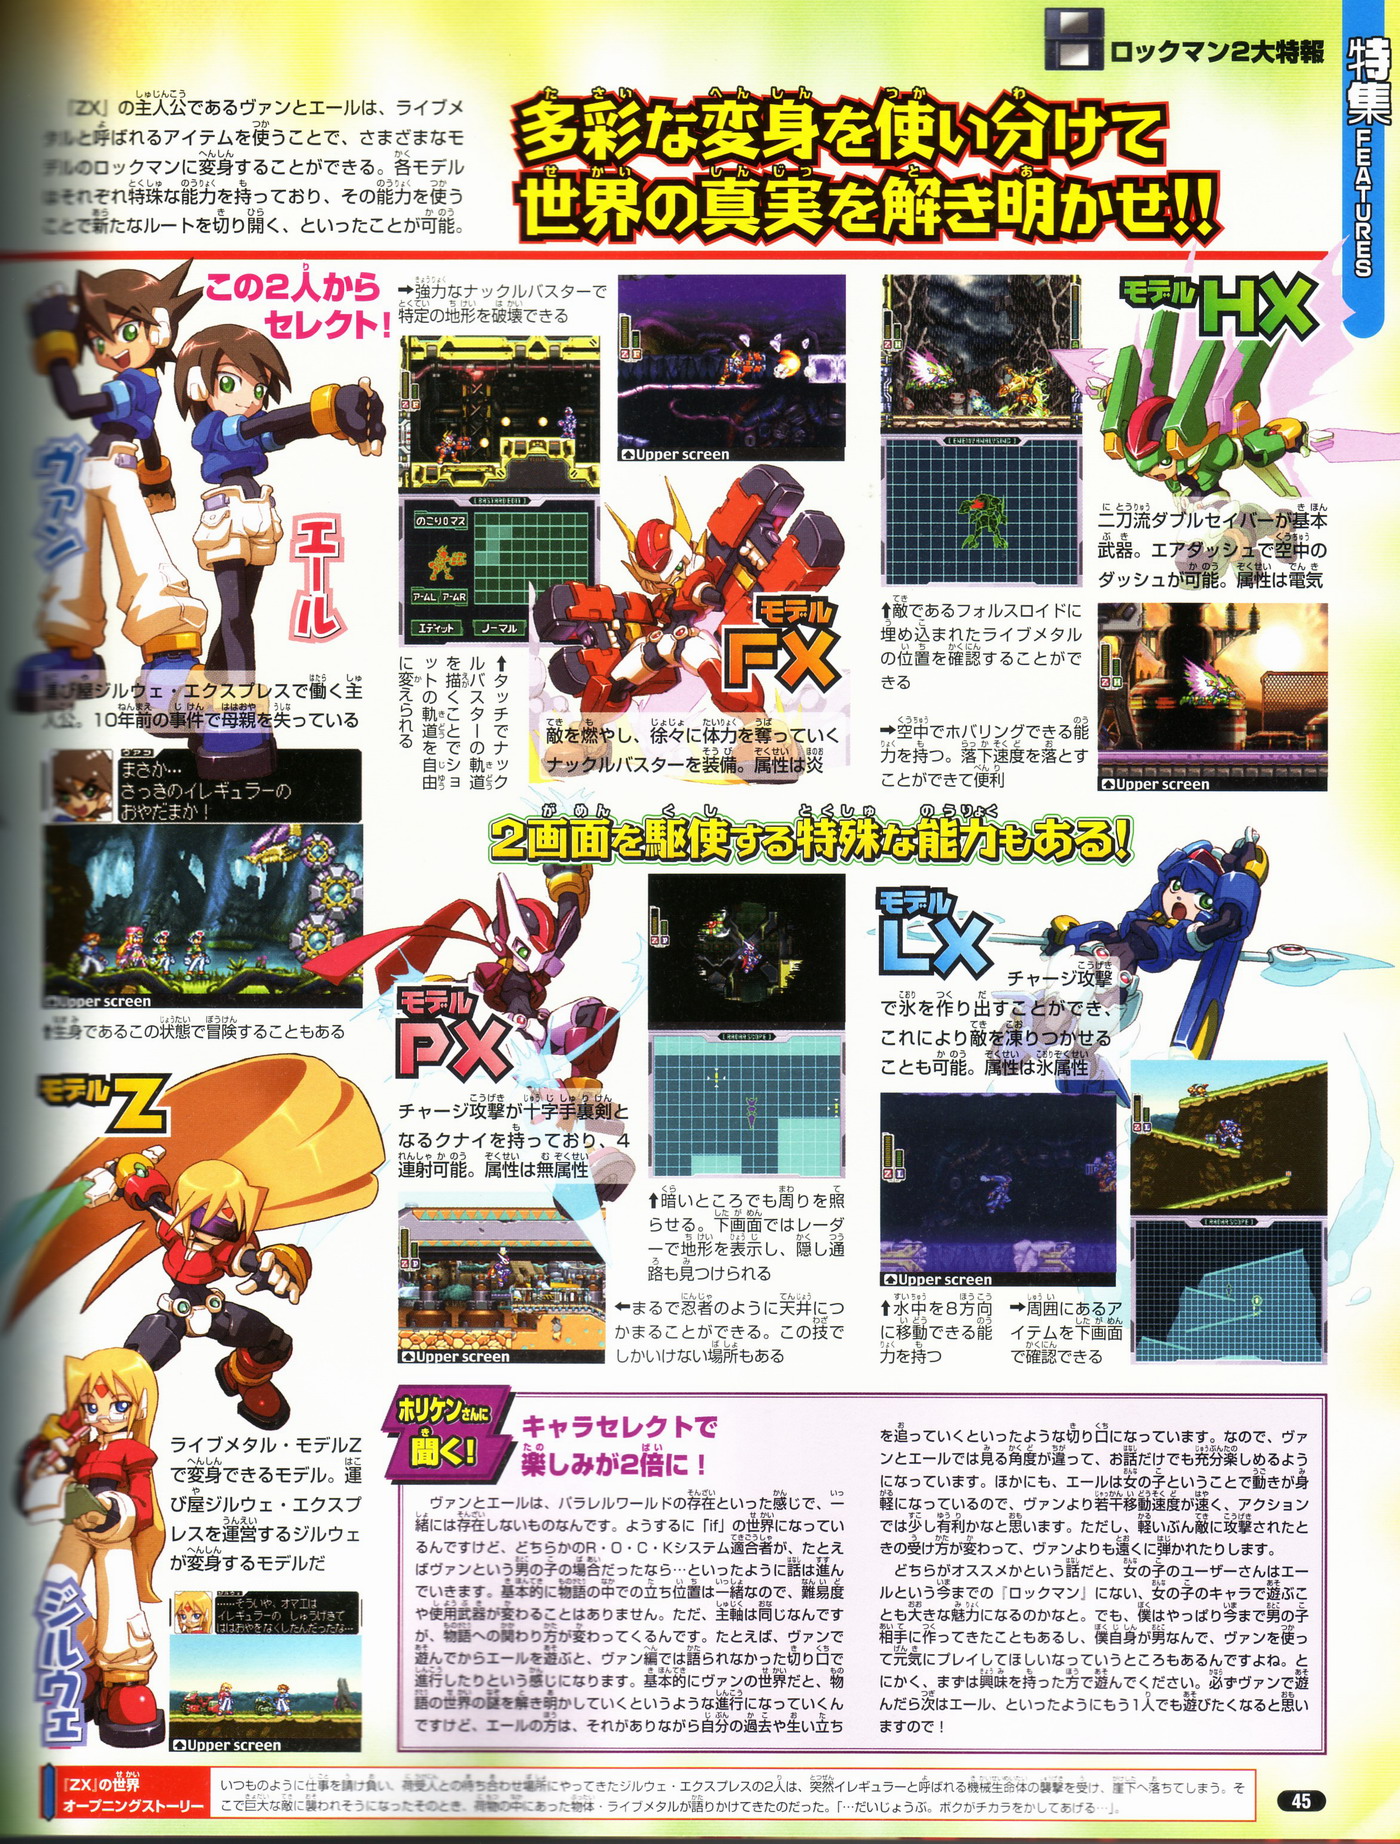 New Mega Man ZX scans | The GoNintendo Archives | GoNintendo